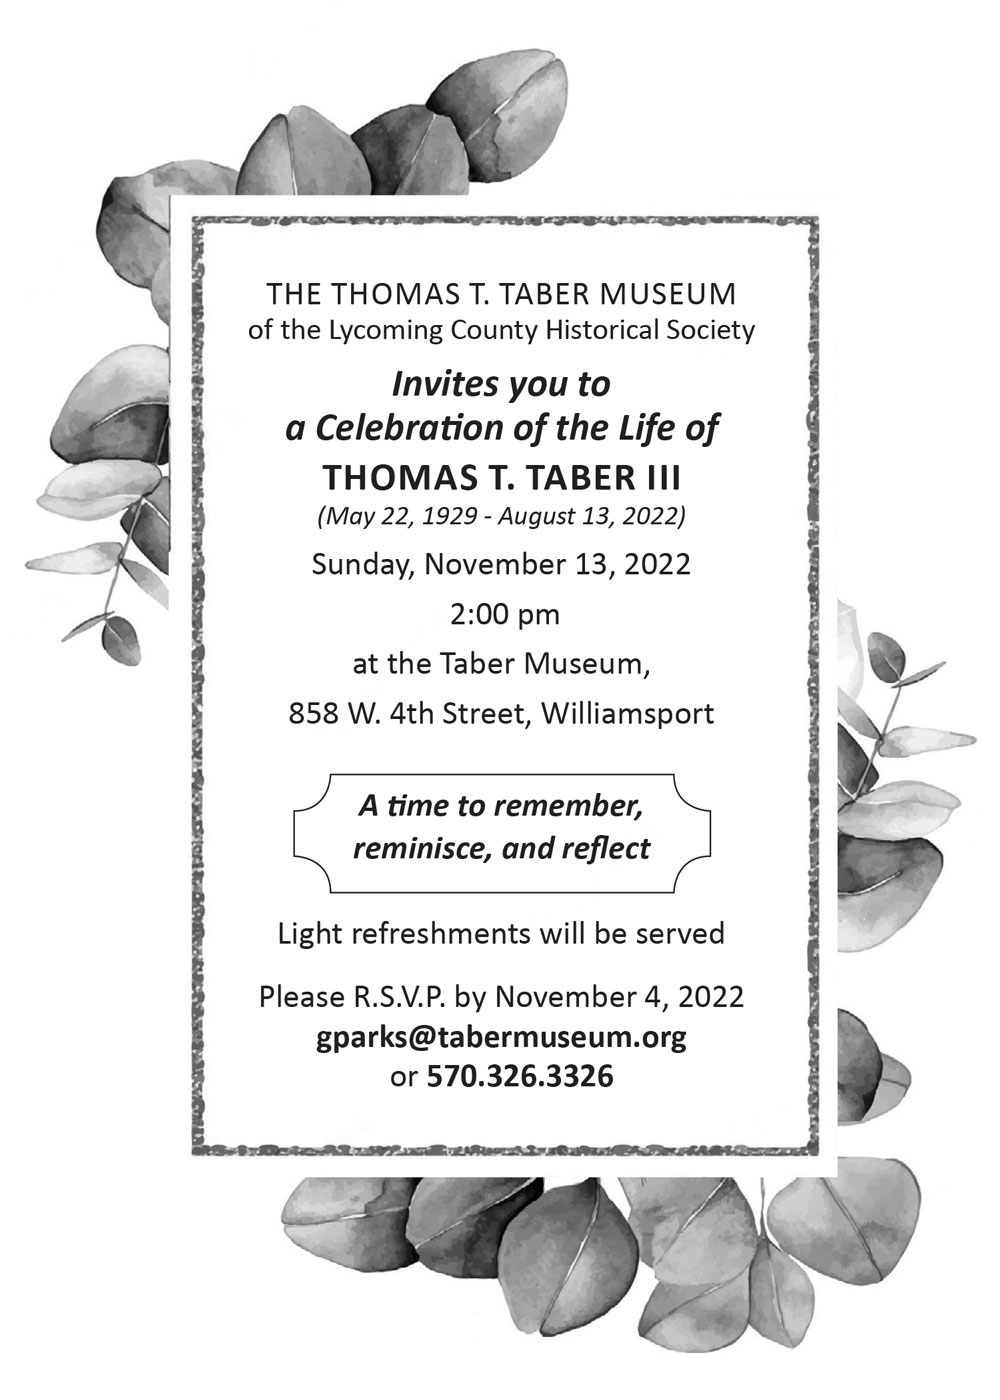 Celebration of the Life of THOMAS T. TABER III